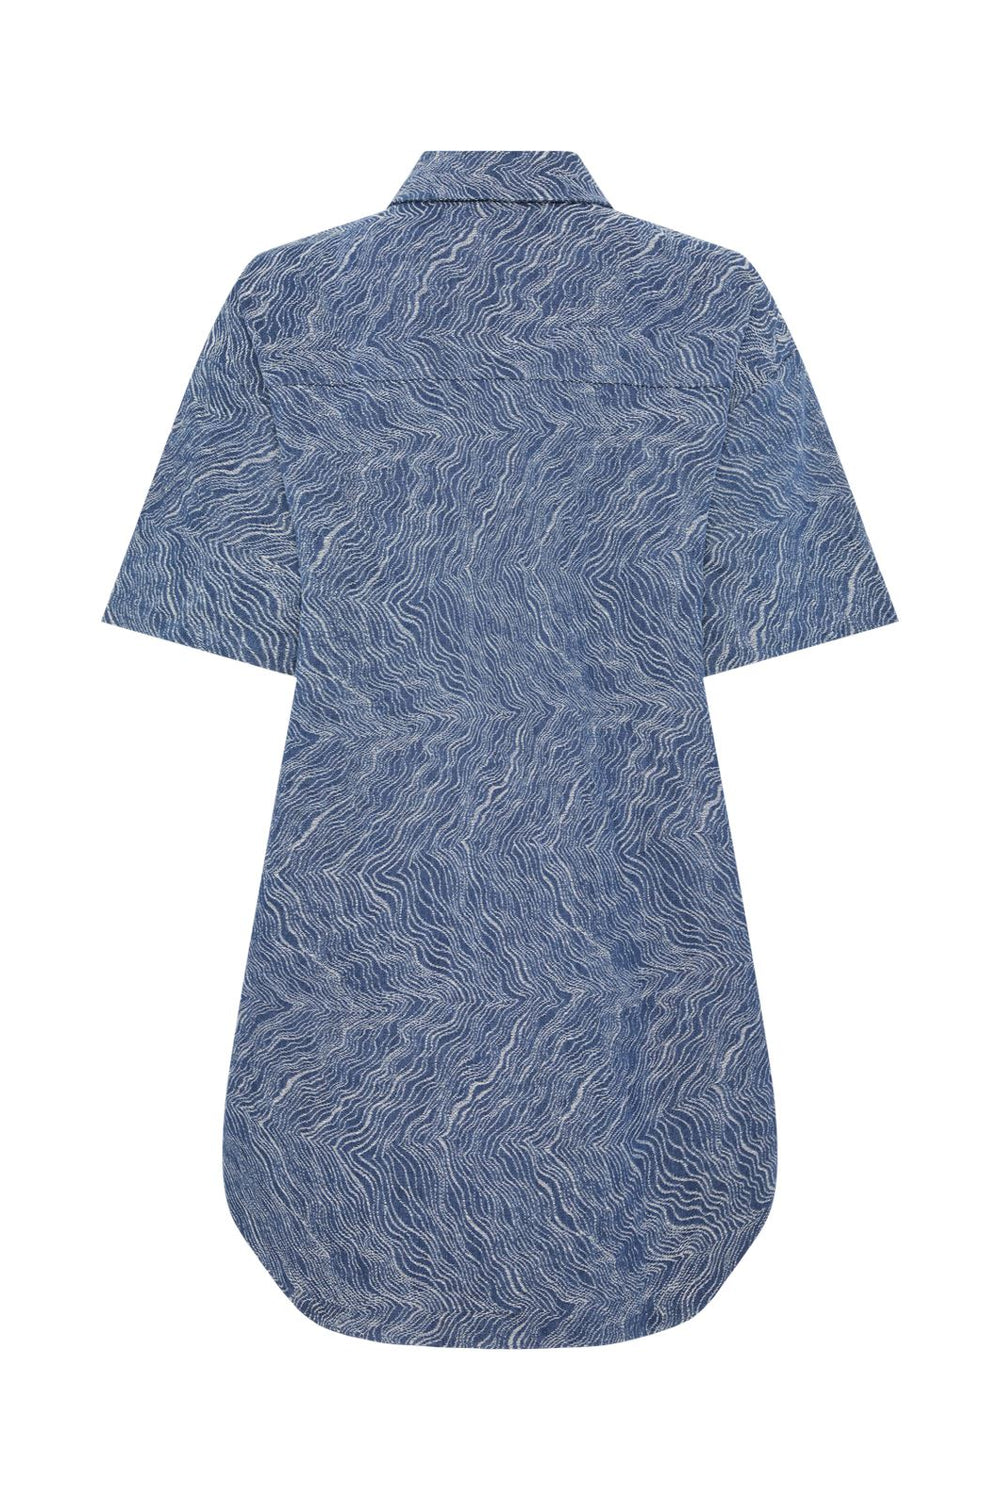 Pieces - Pcjennifer Ss Short Denim Shirt Dres - 4686007 Medium Blue Denim Jaquard